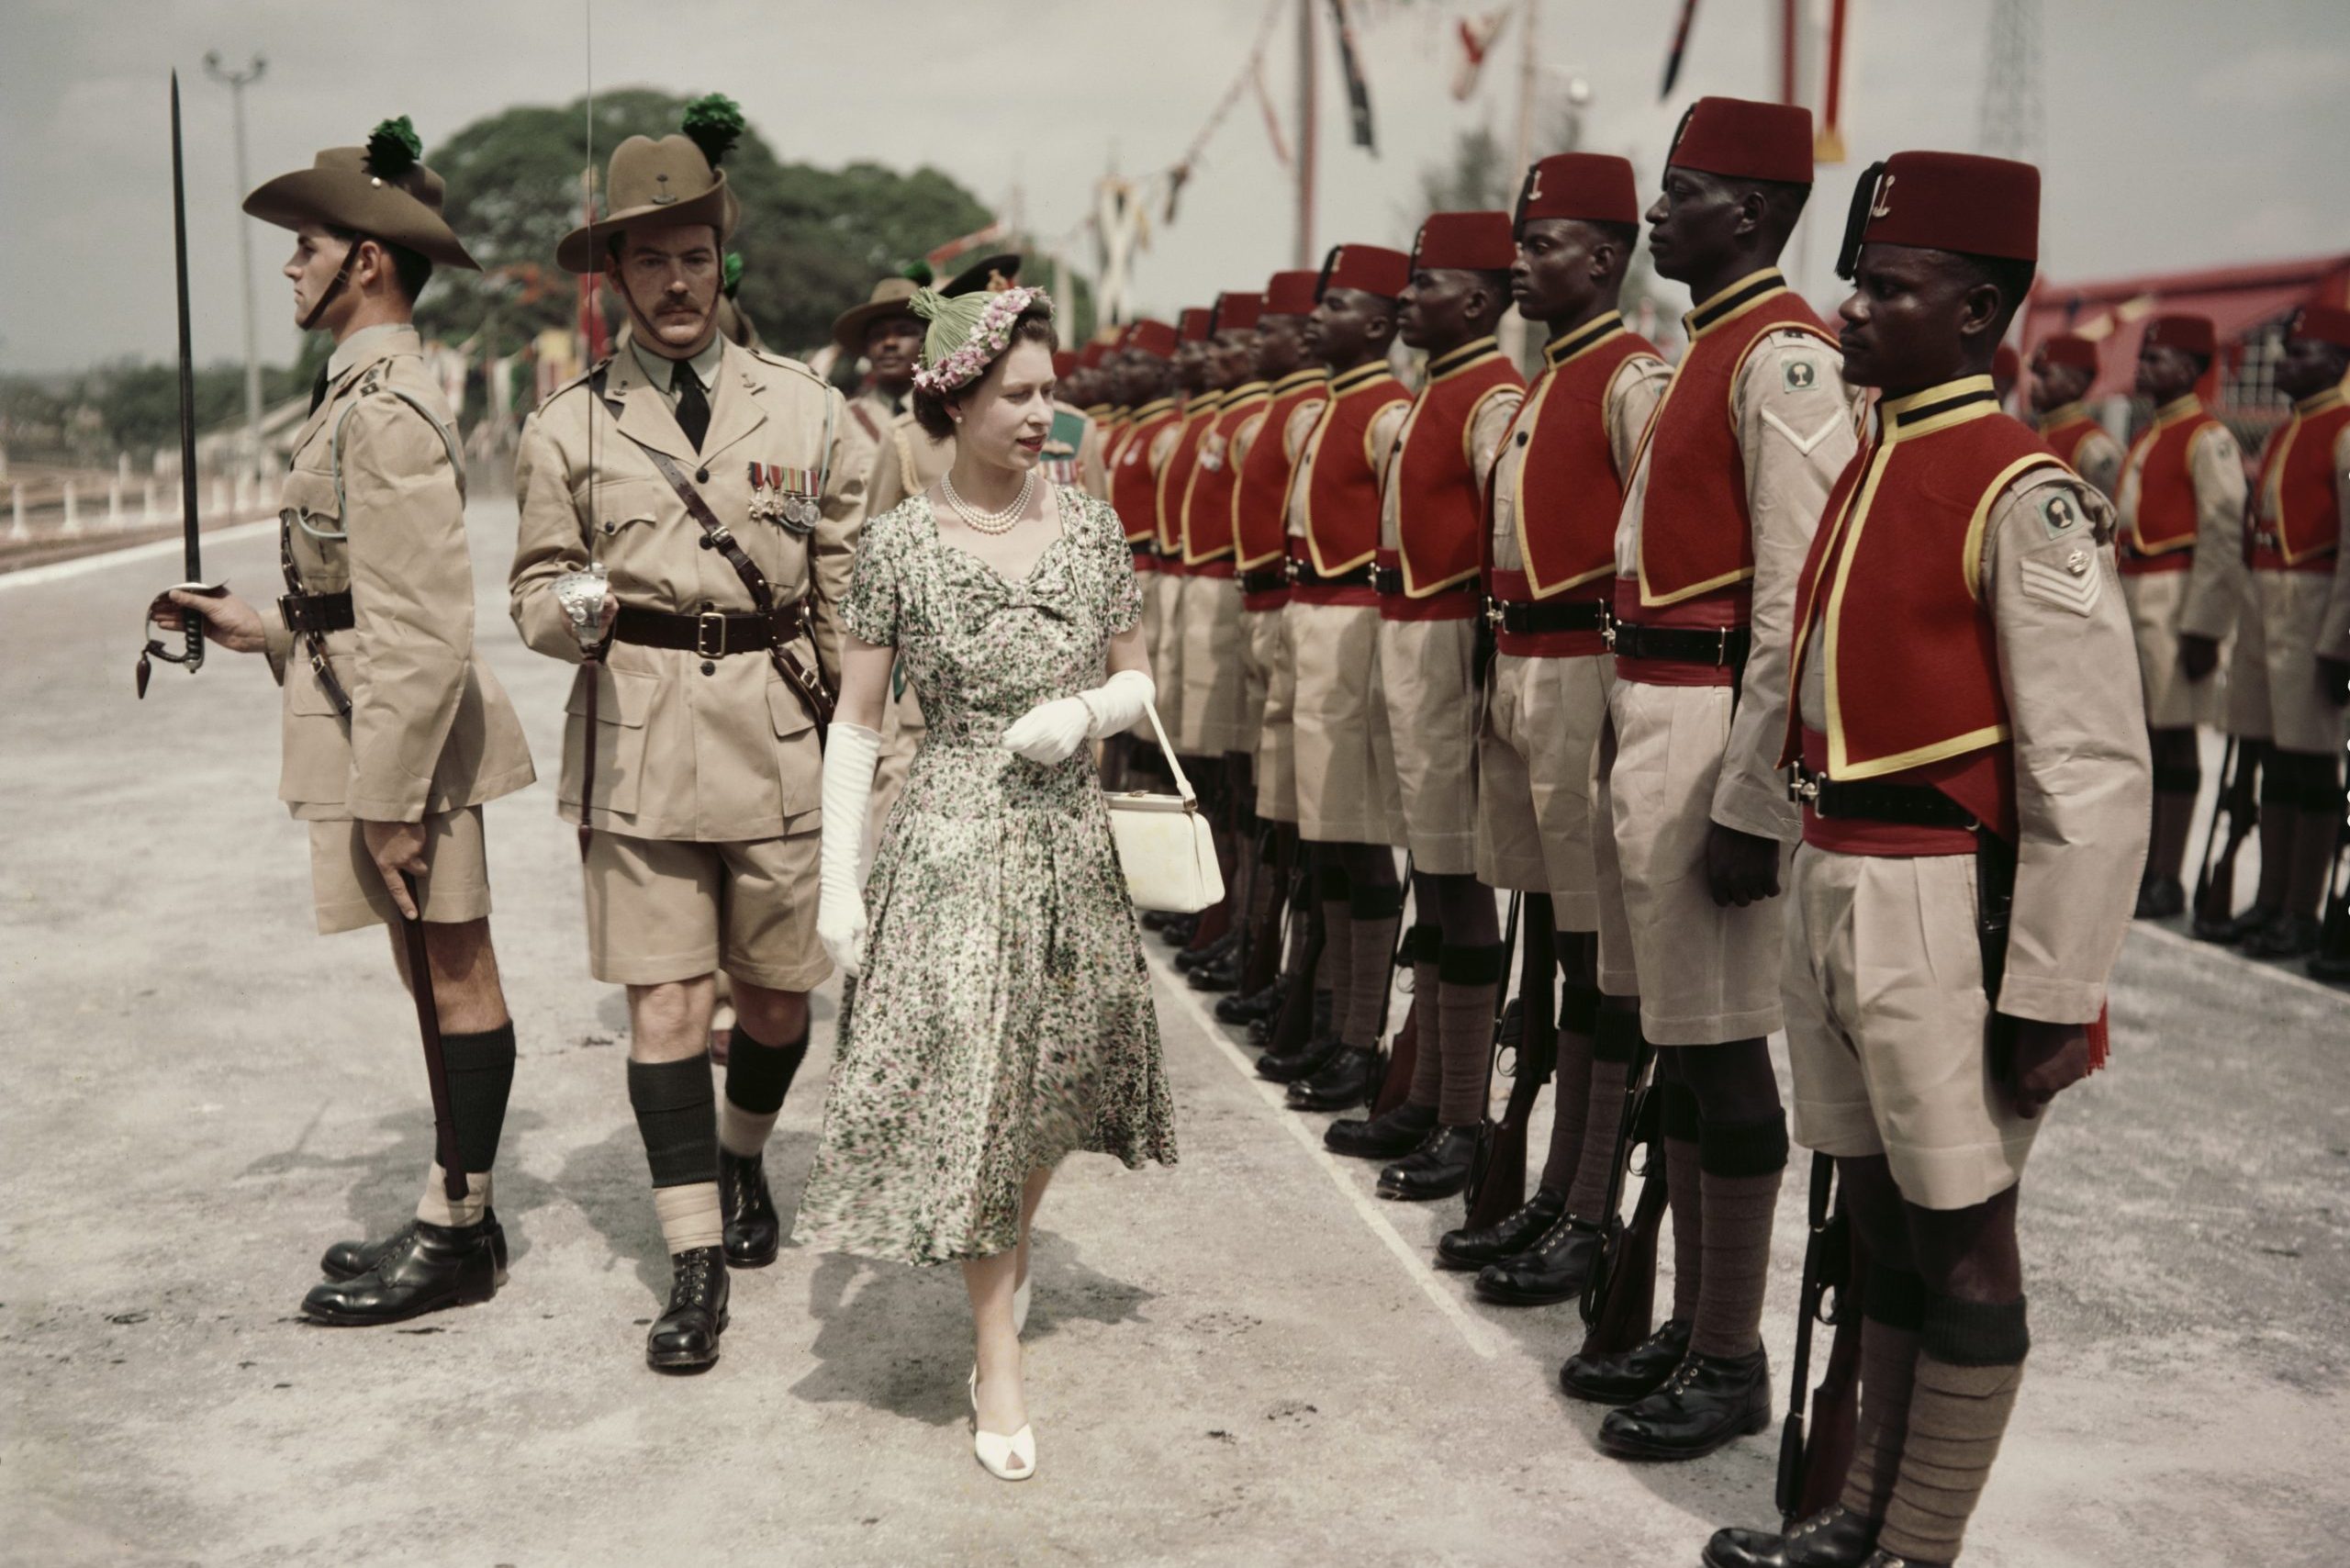 Queen Elizabeth II Wasn't Innocent of the British Empire's Colonial Sins